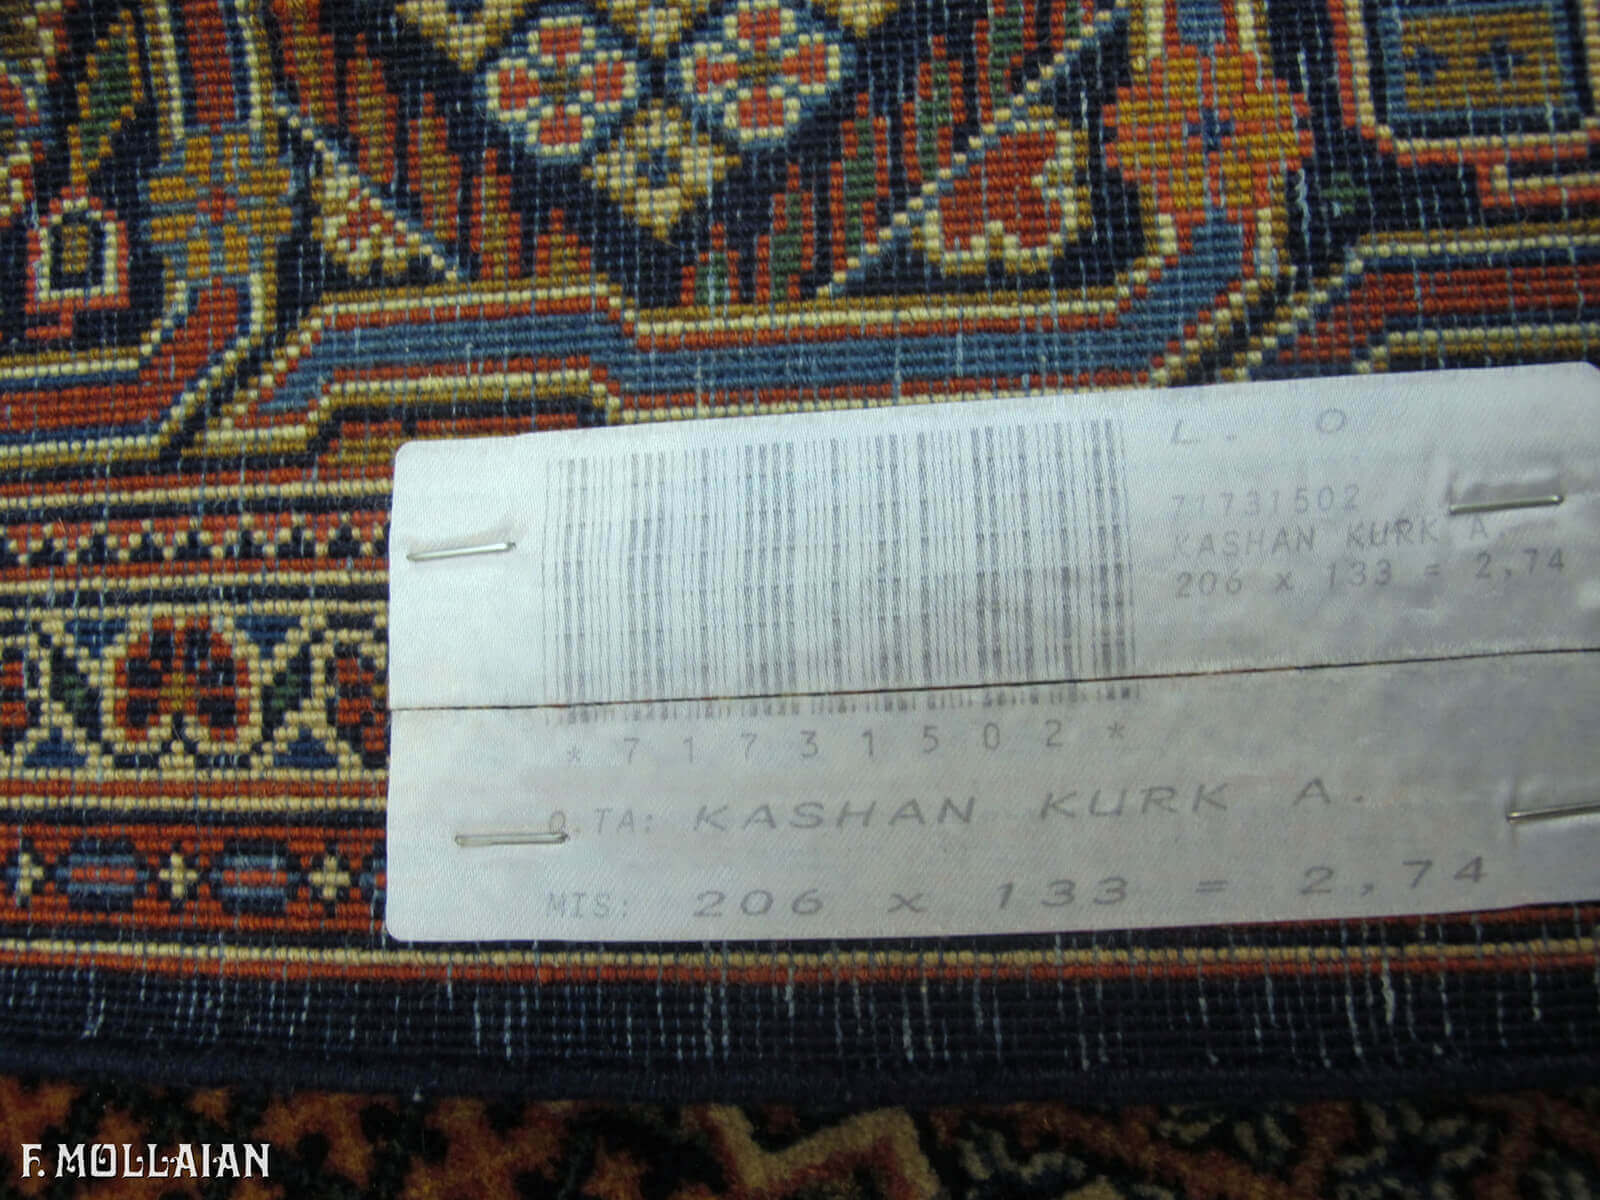 Antique Persian Kashan Kurk Rug n°:71731502